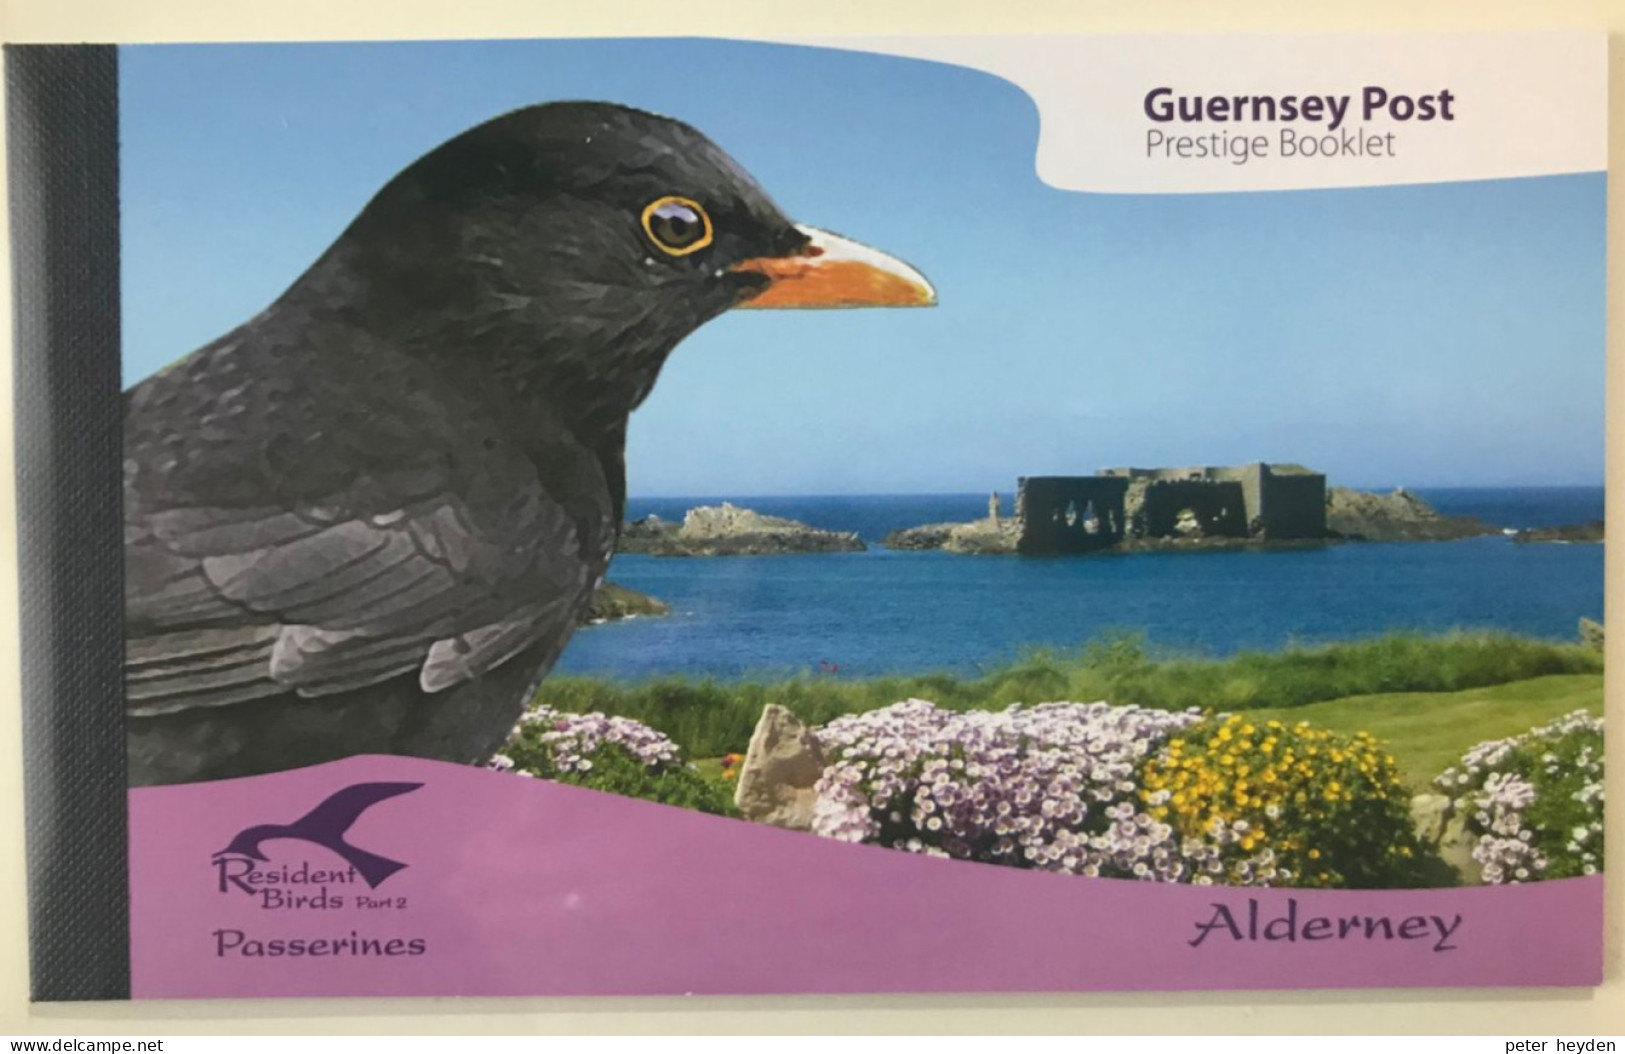 Alderney 2007 Resident Birds 2 Passerines ~ MNH Prestige Booklet ~ Blackbird, Warbler, Jackdaw, Sparrow, Wren, Tit - Alderney